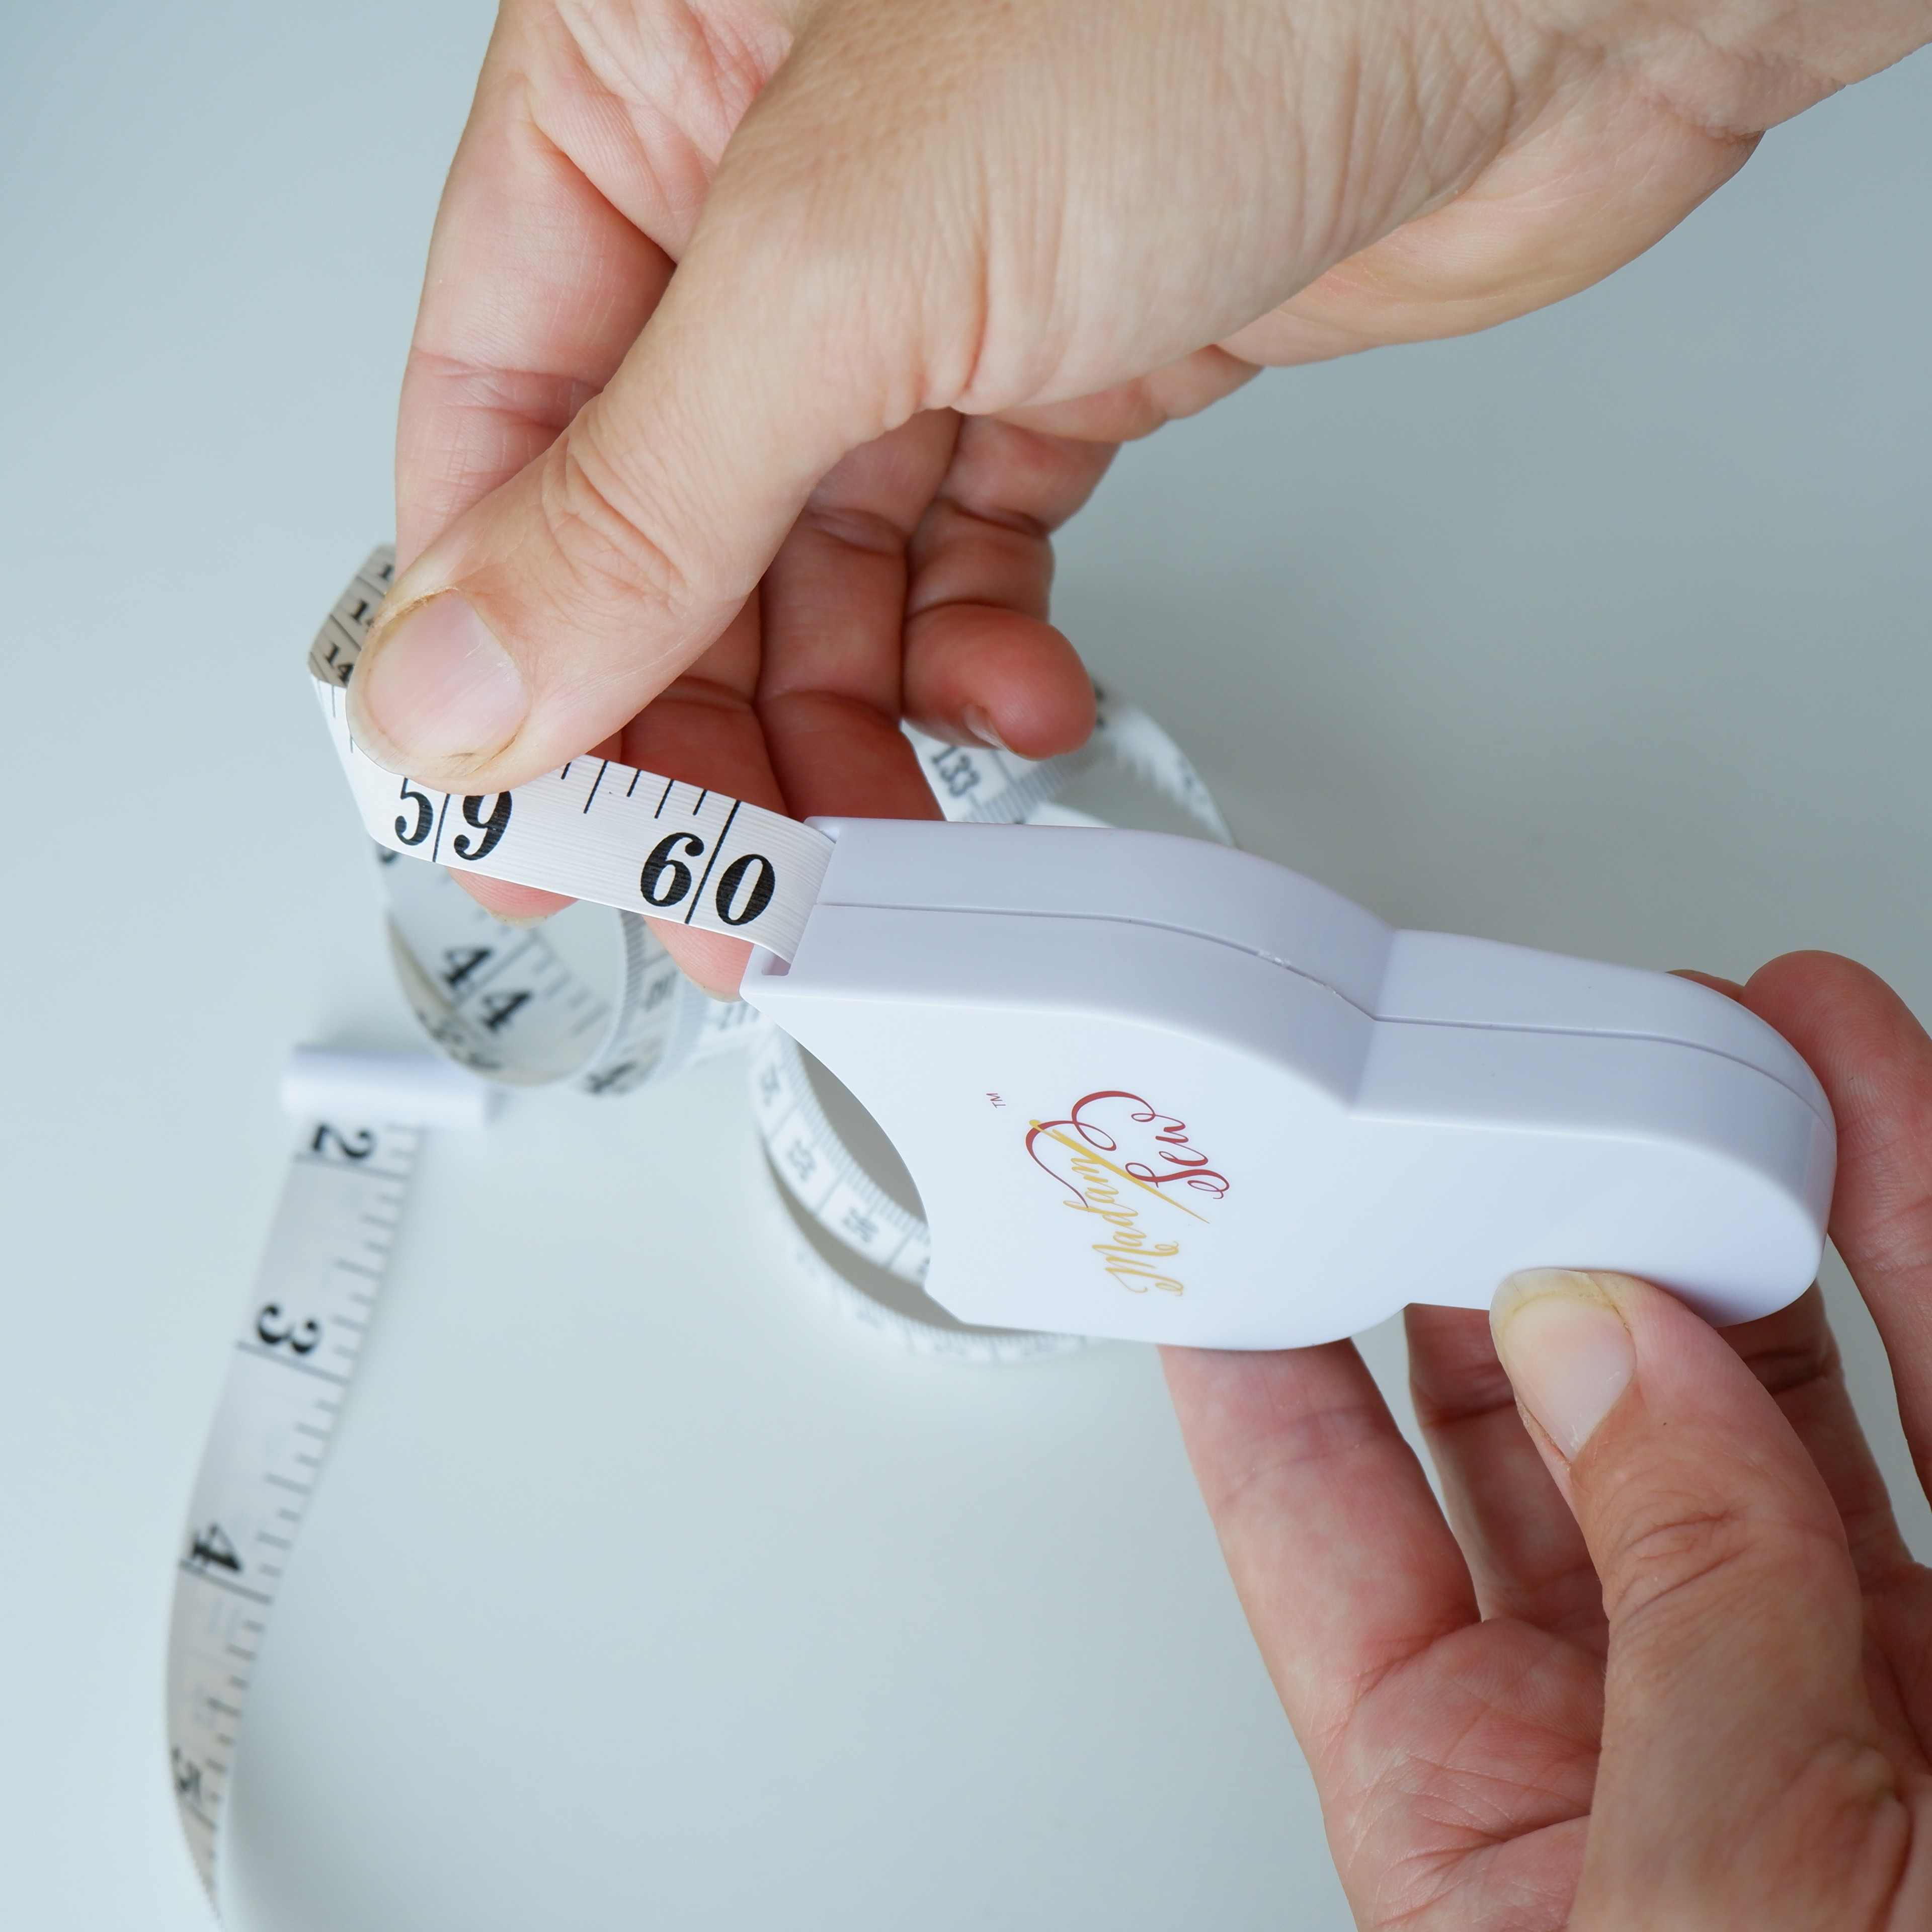 Body Measuring Tape Instruction Manual